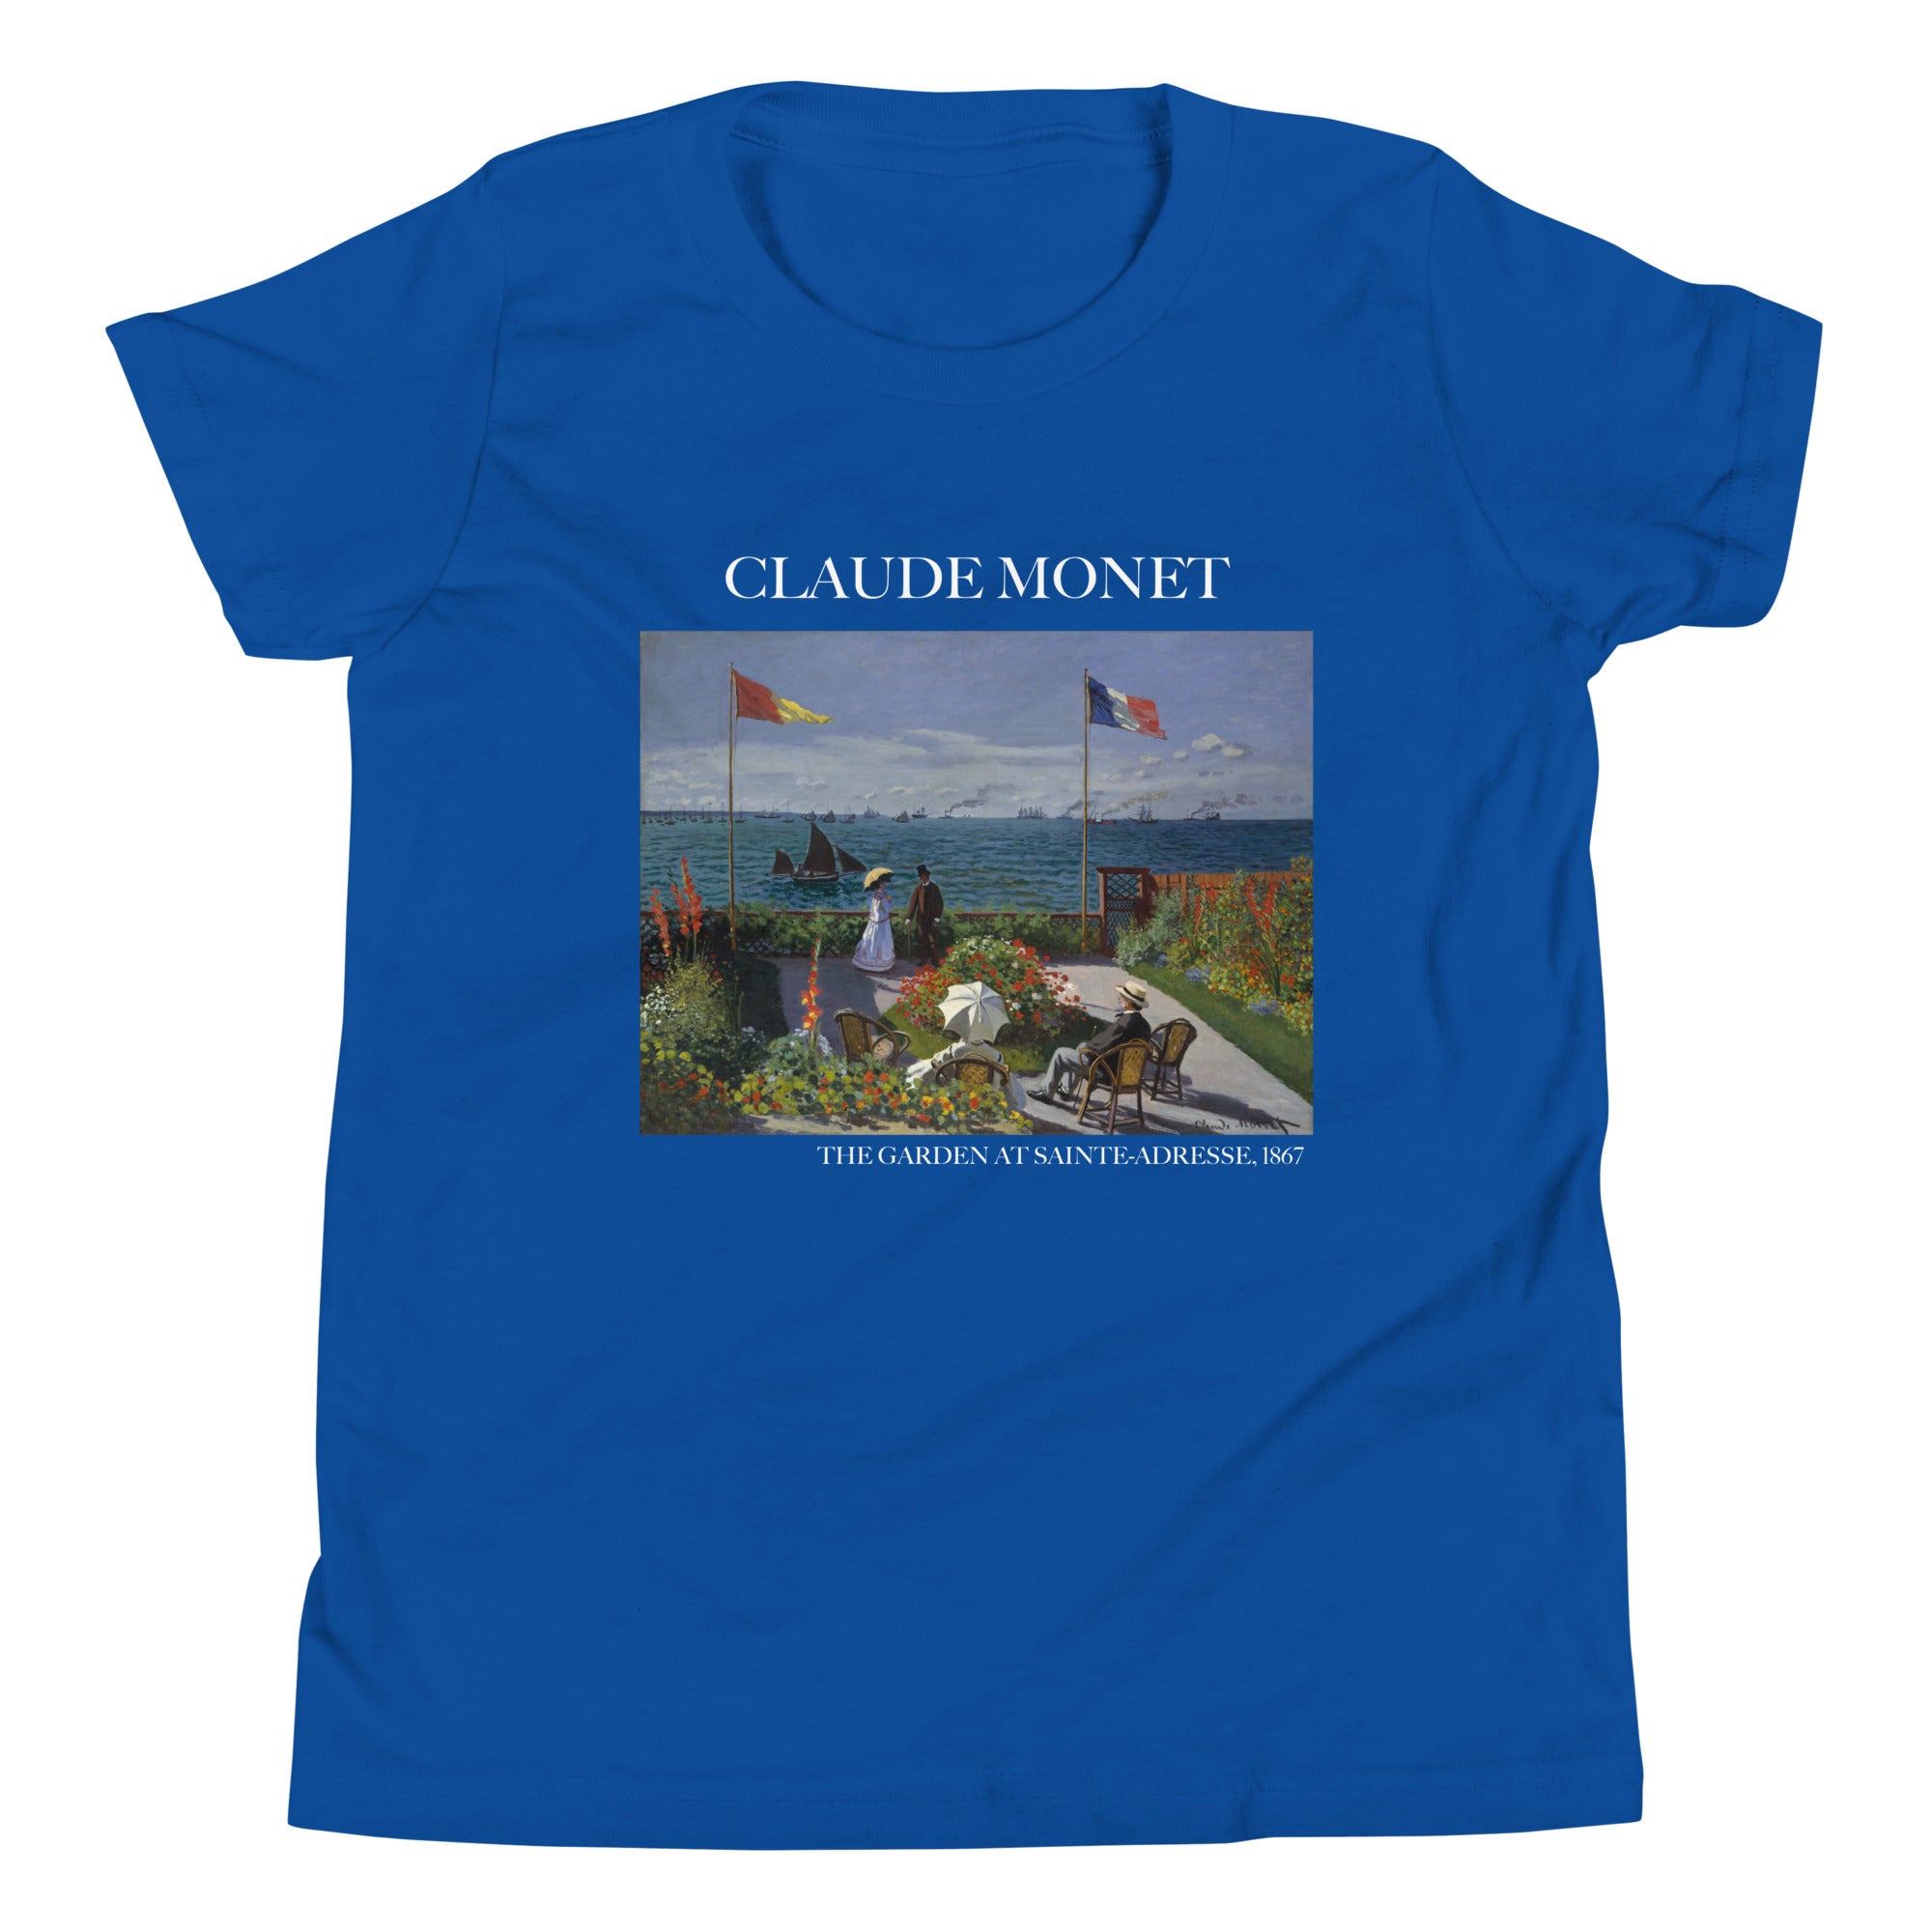 Claude Monet 'The Garden at Sainte-Adresse' Famous Painting Short Sleeve T-Shirt | Premium Youth Art Tee